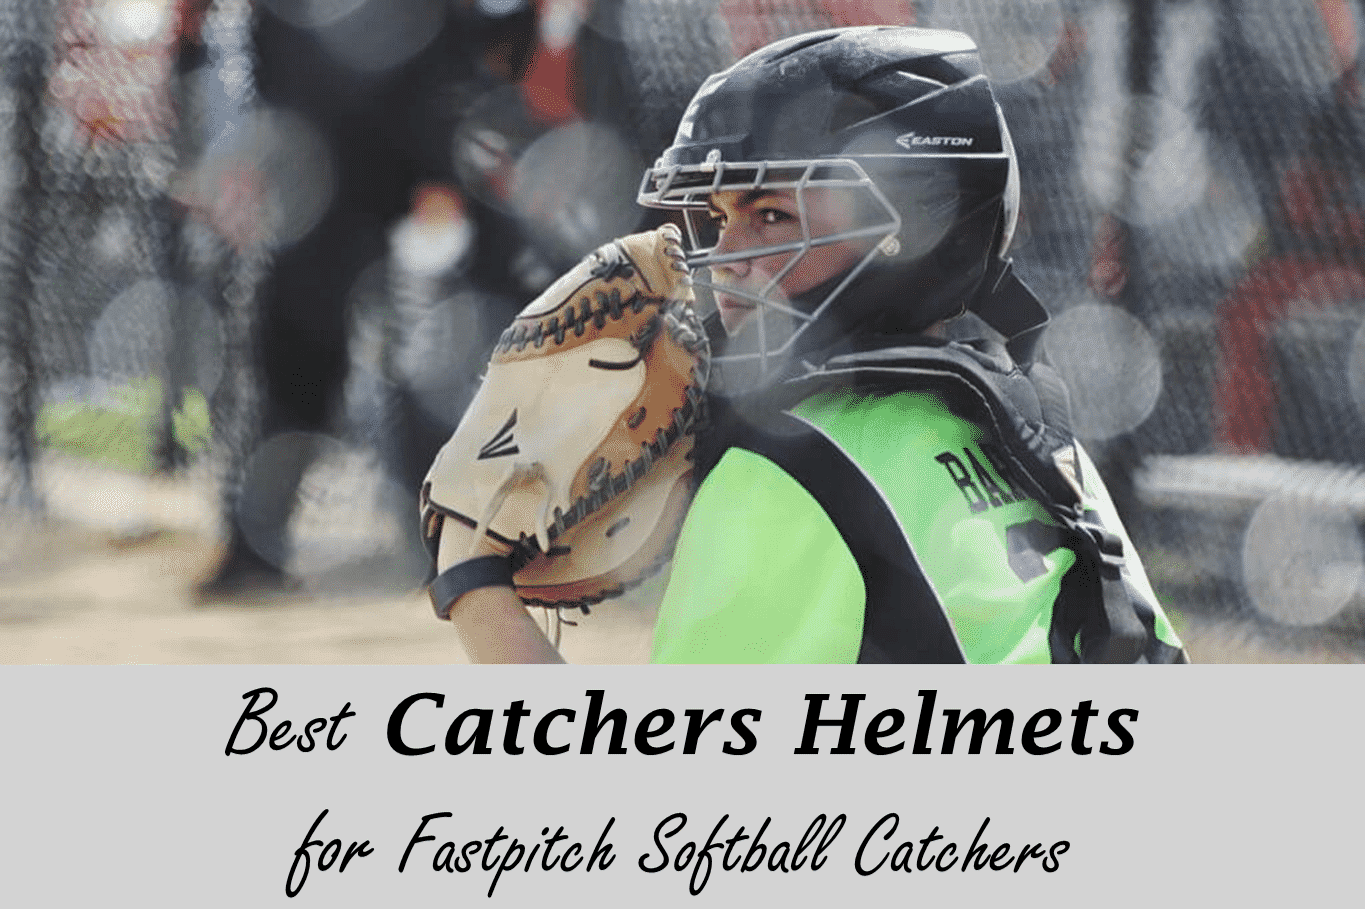 mizuno samurai catchers helmet